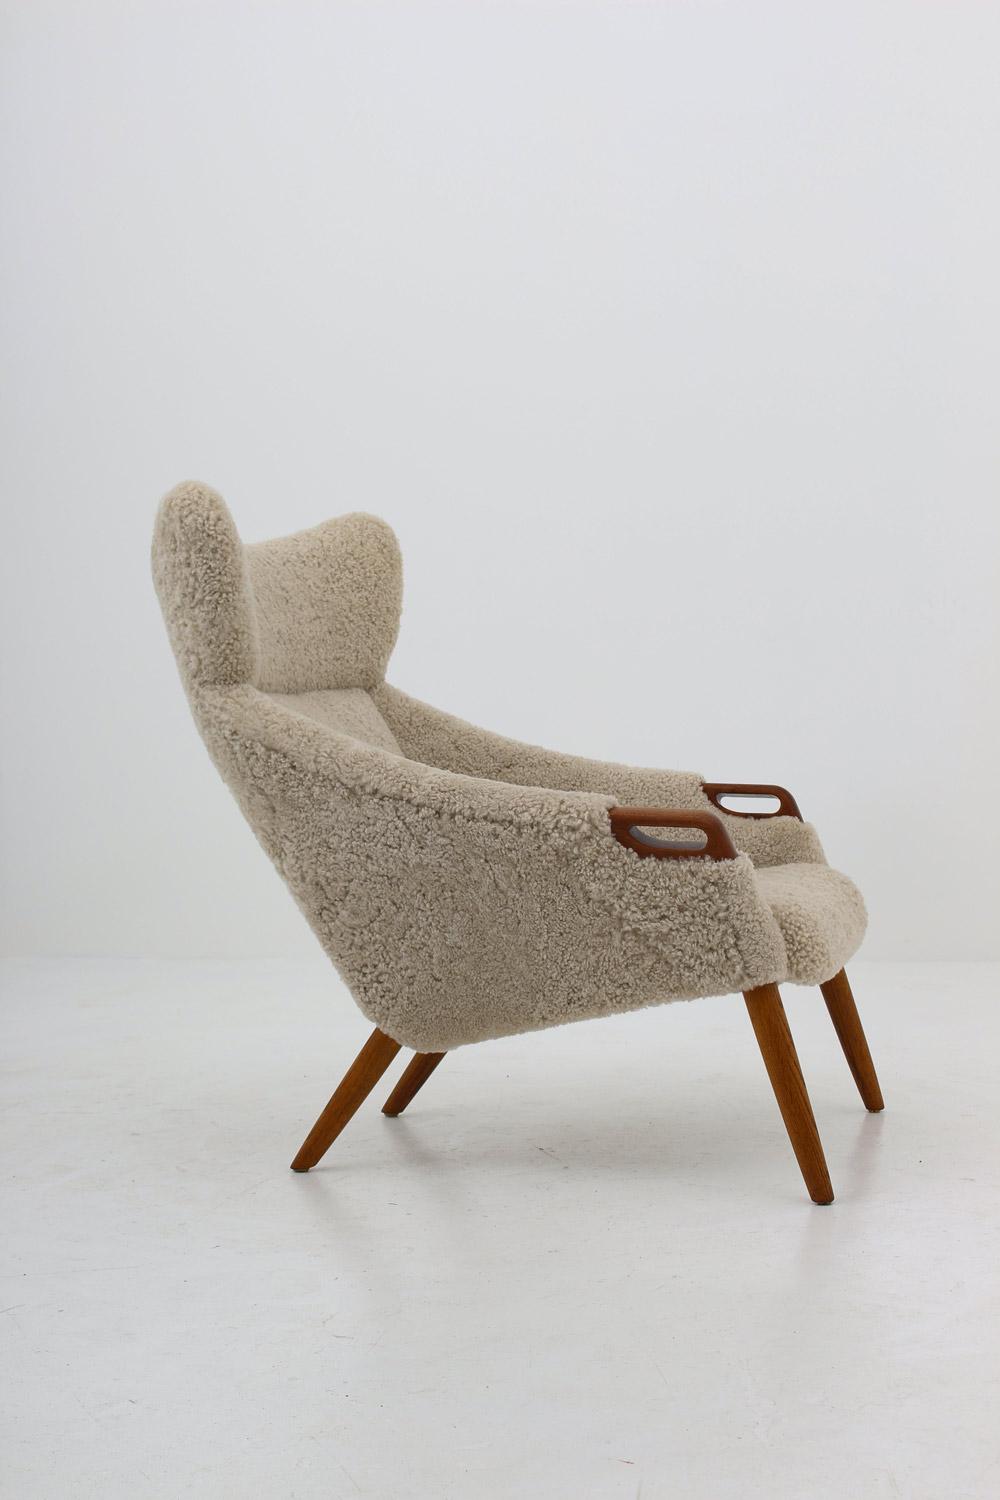 20th Century Danish Lounge Chair in Sheepskin, Model 55 by Kurt Østervig